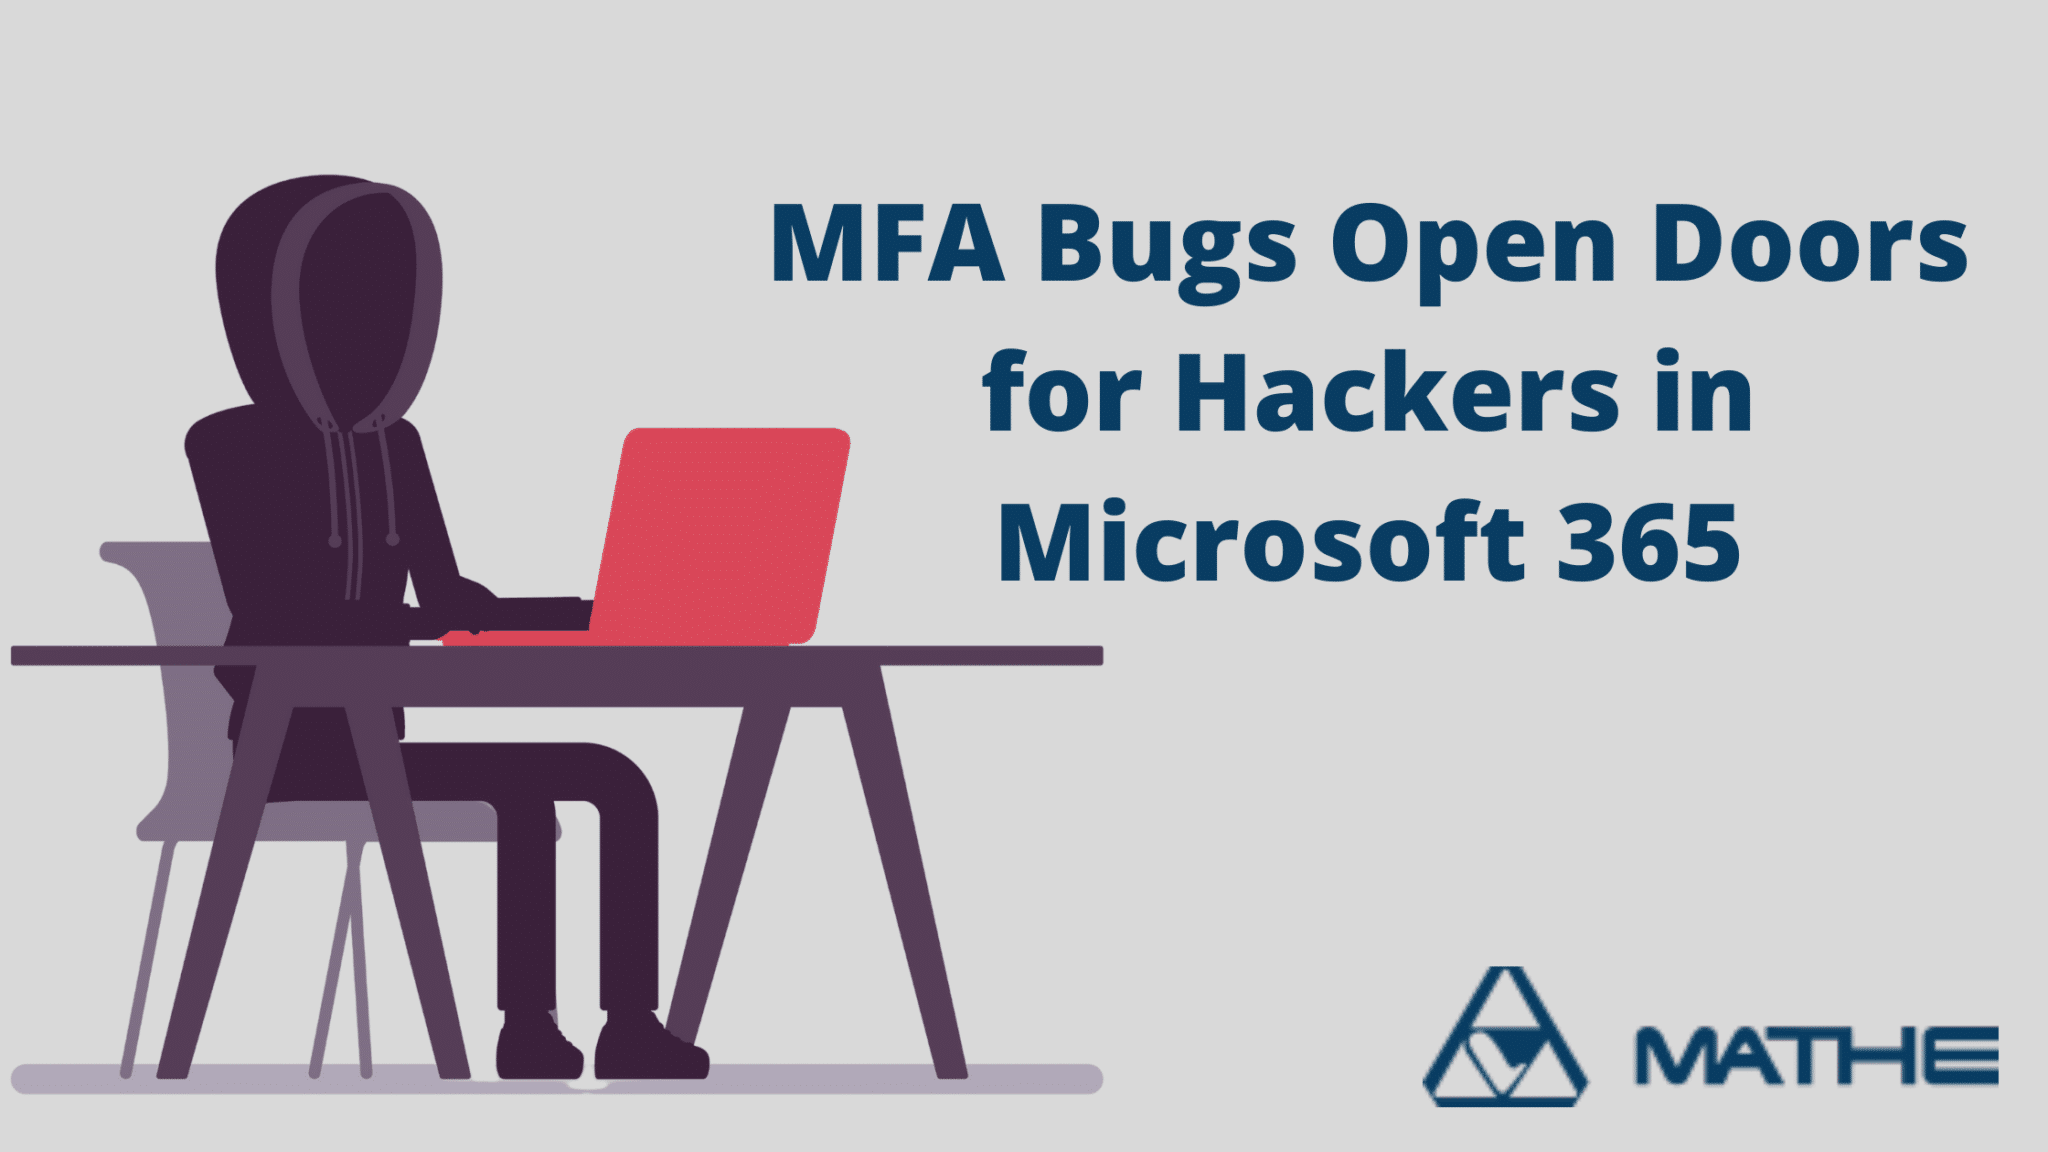 MFA Bugs Open Doors for Hackers in Microsoft 365